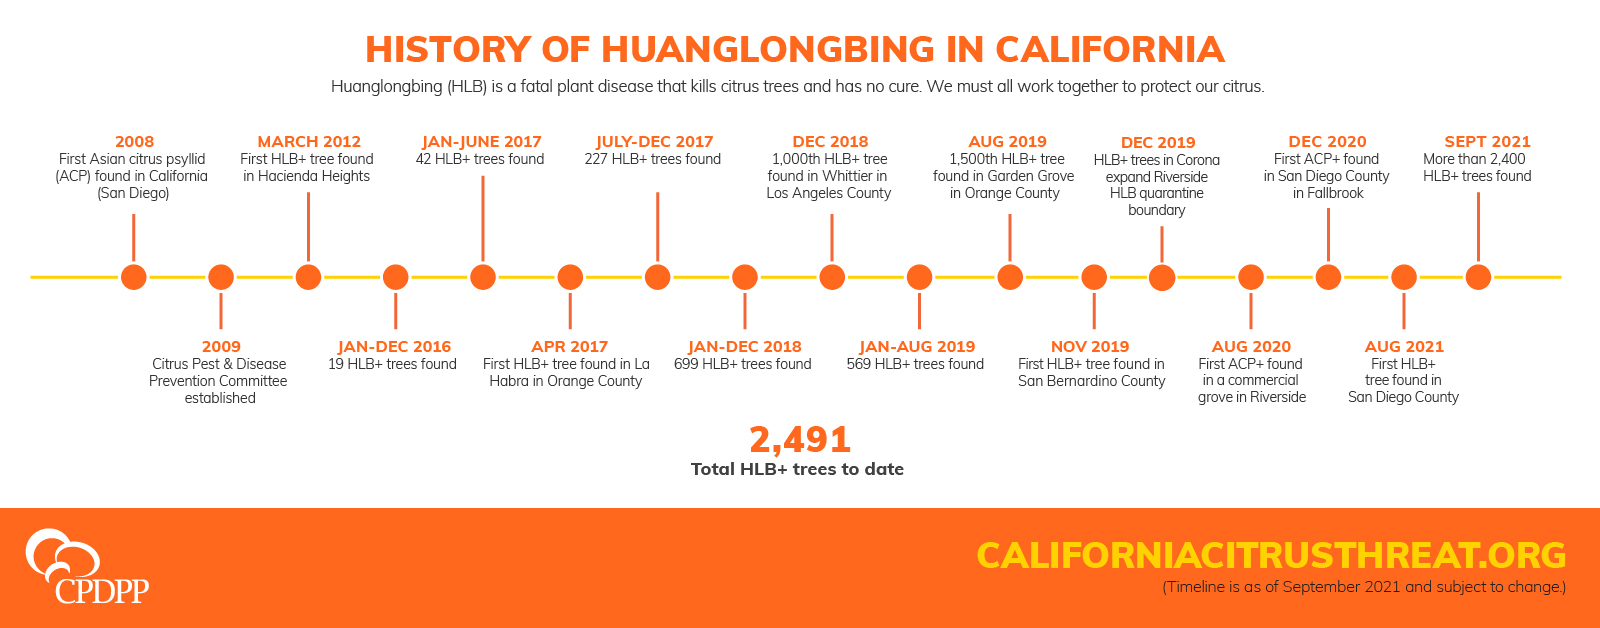 History of HLB in California